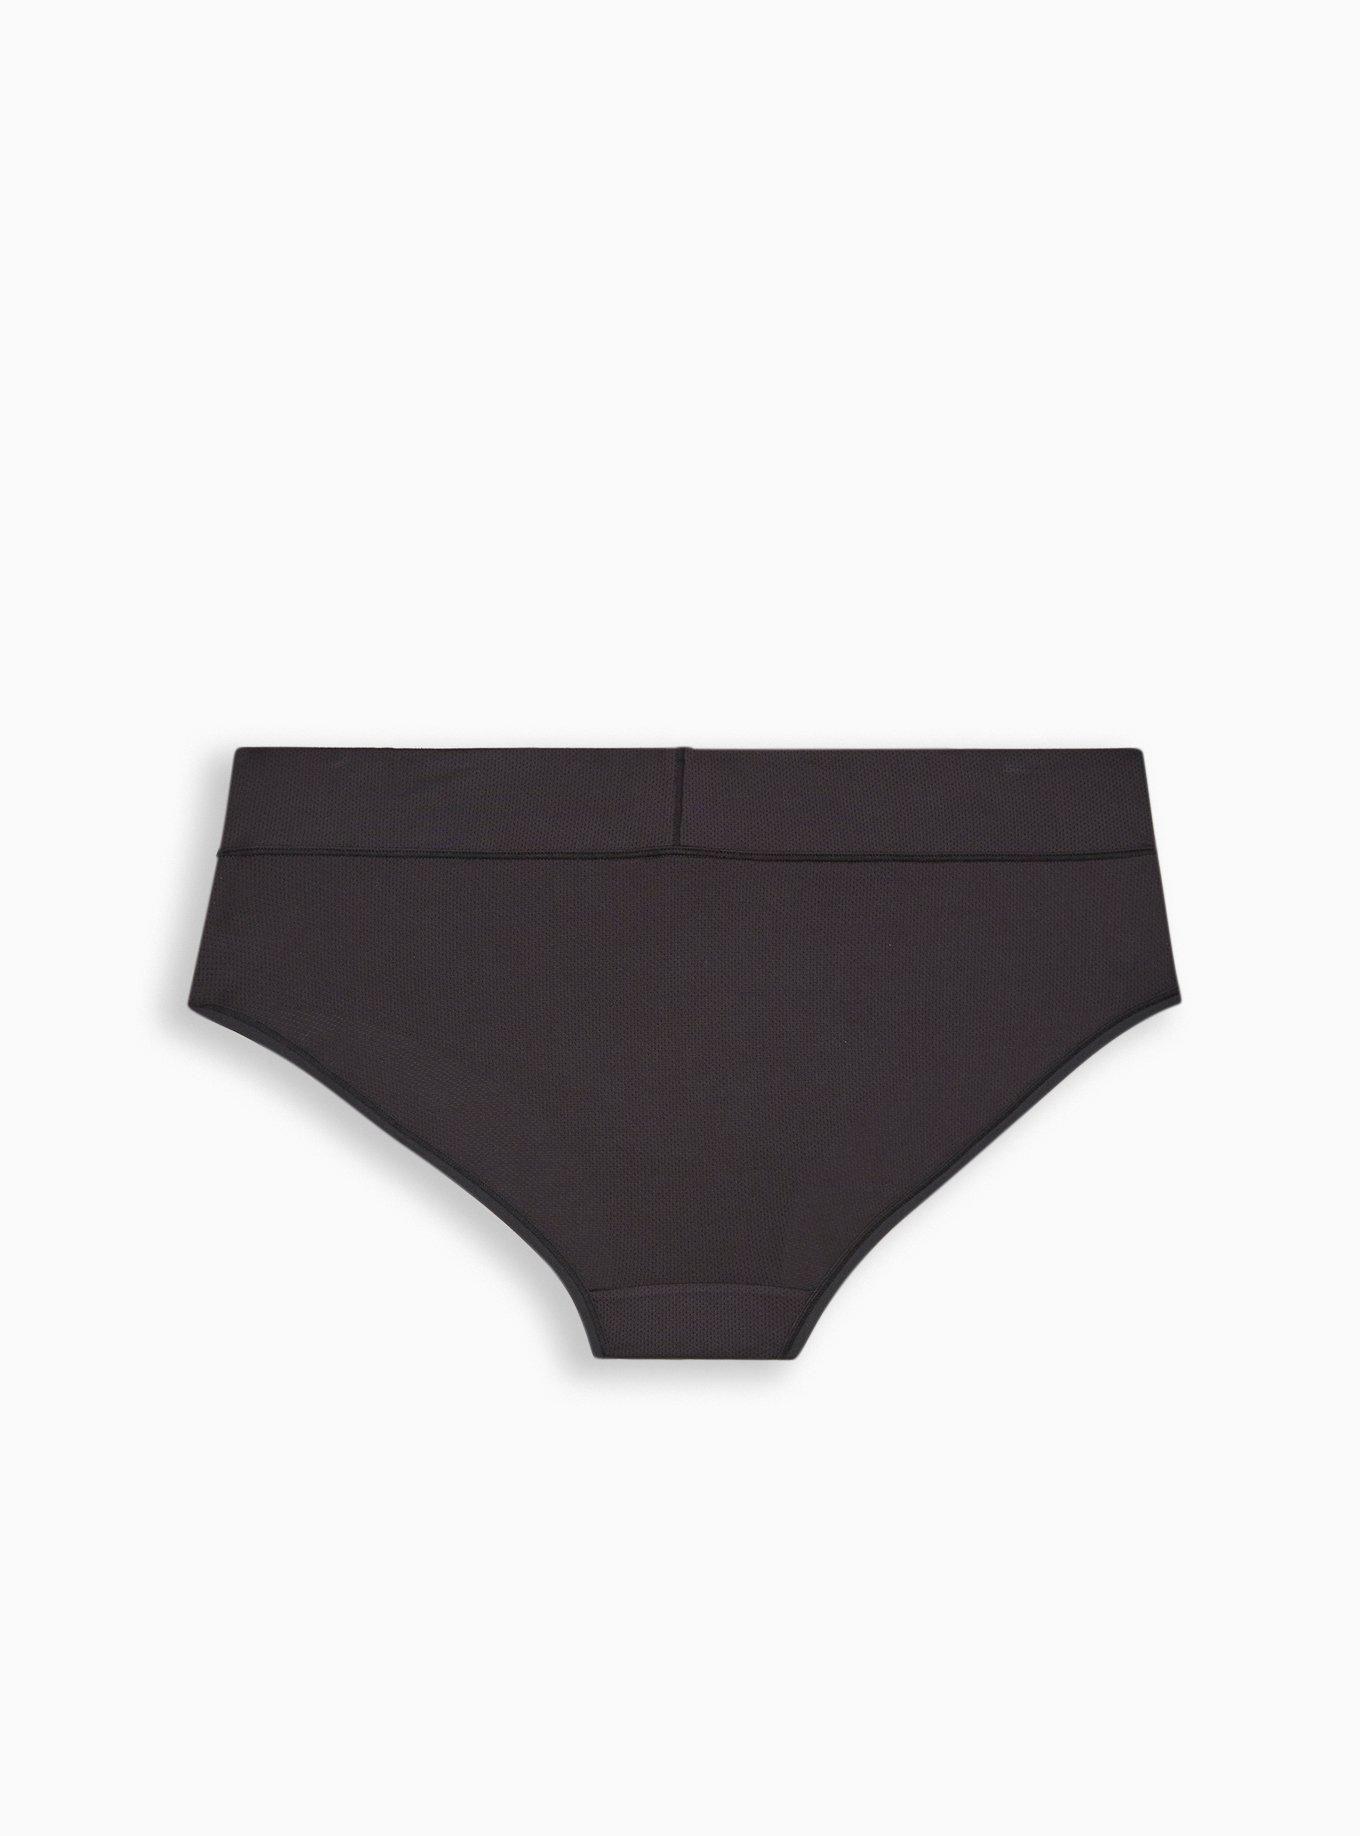 Calvin Klein Underwear Women Hipster Panties S-XL 3 Dominican Republic